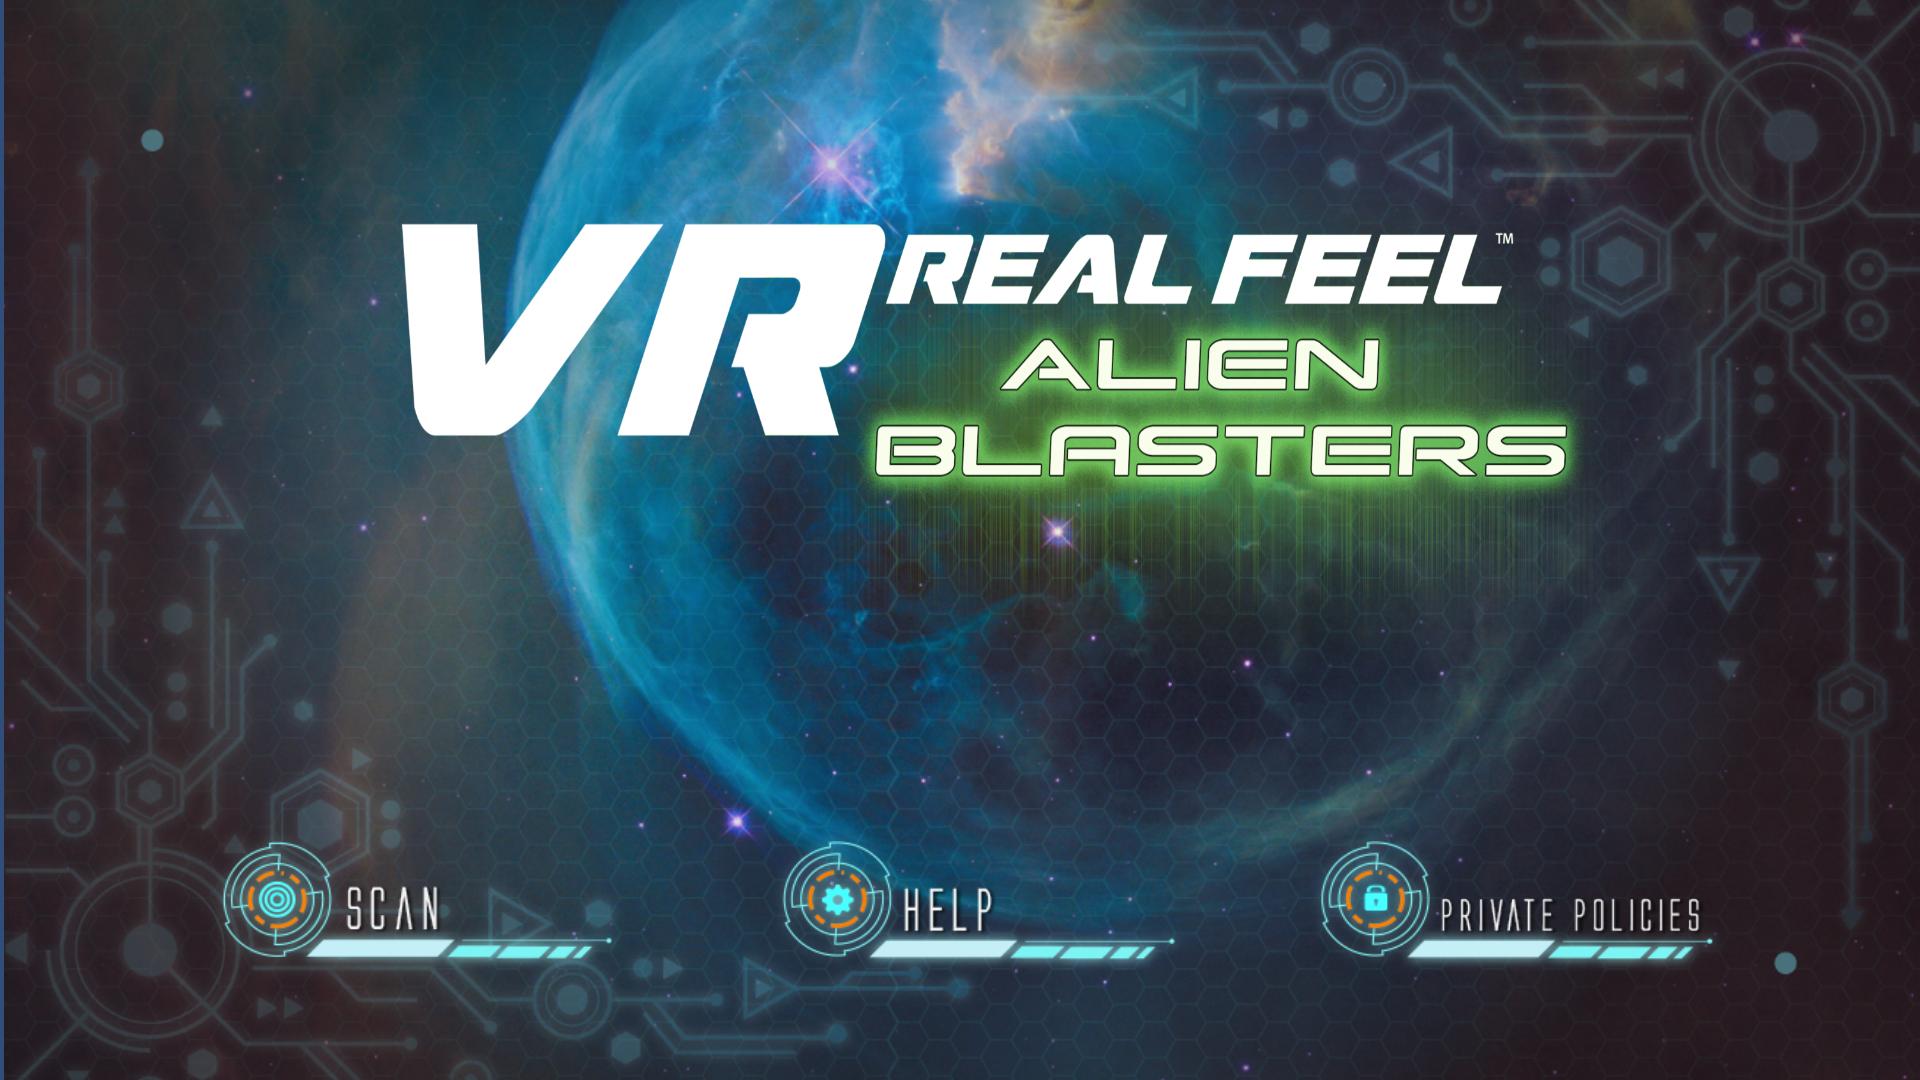 Download VR Real Feel Alien Blasters on PC